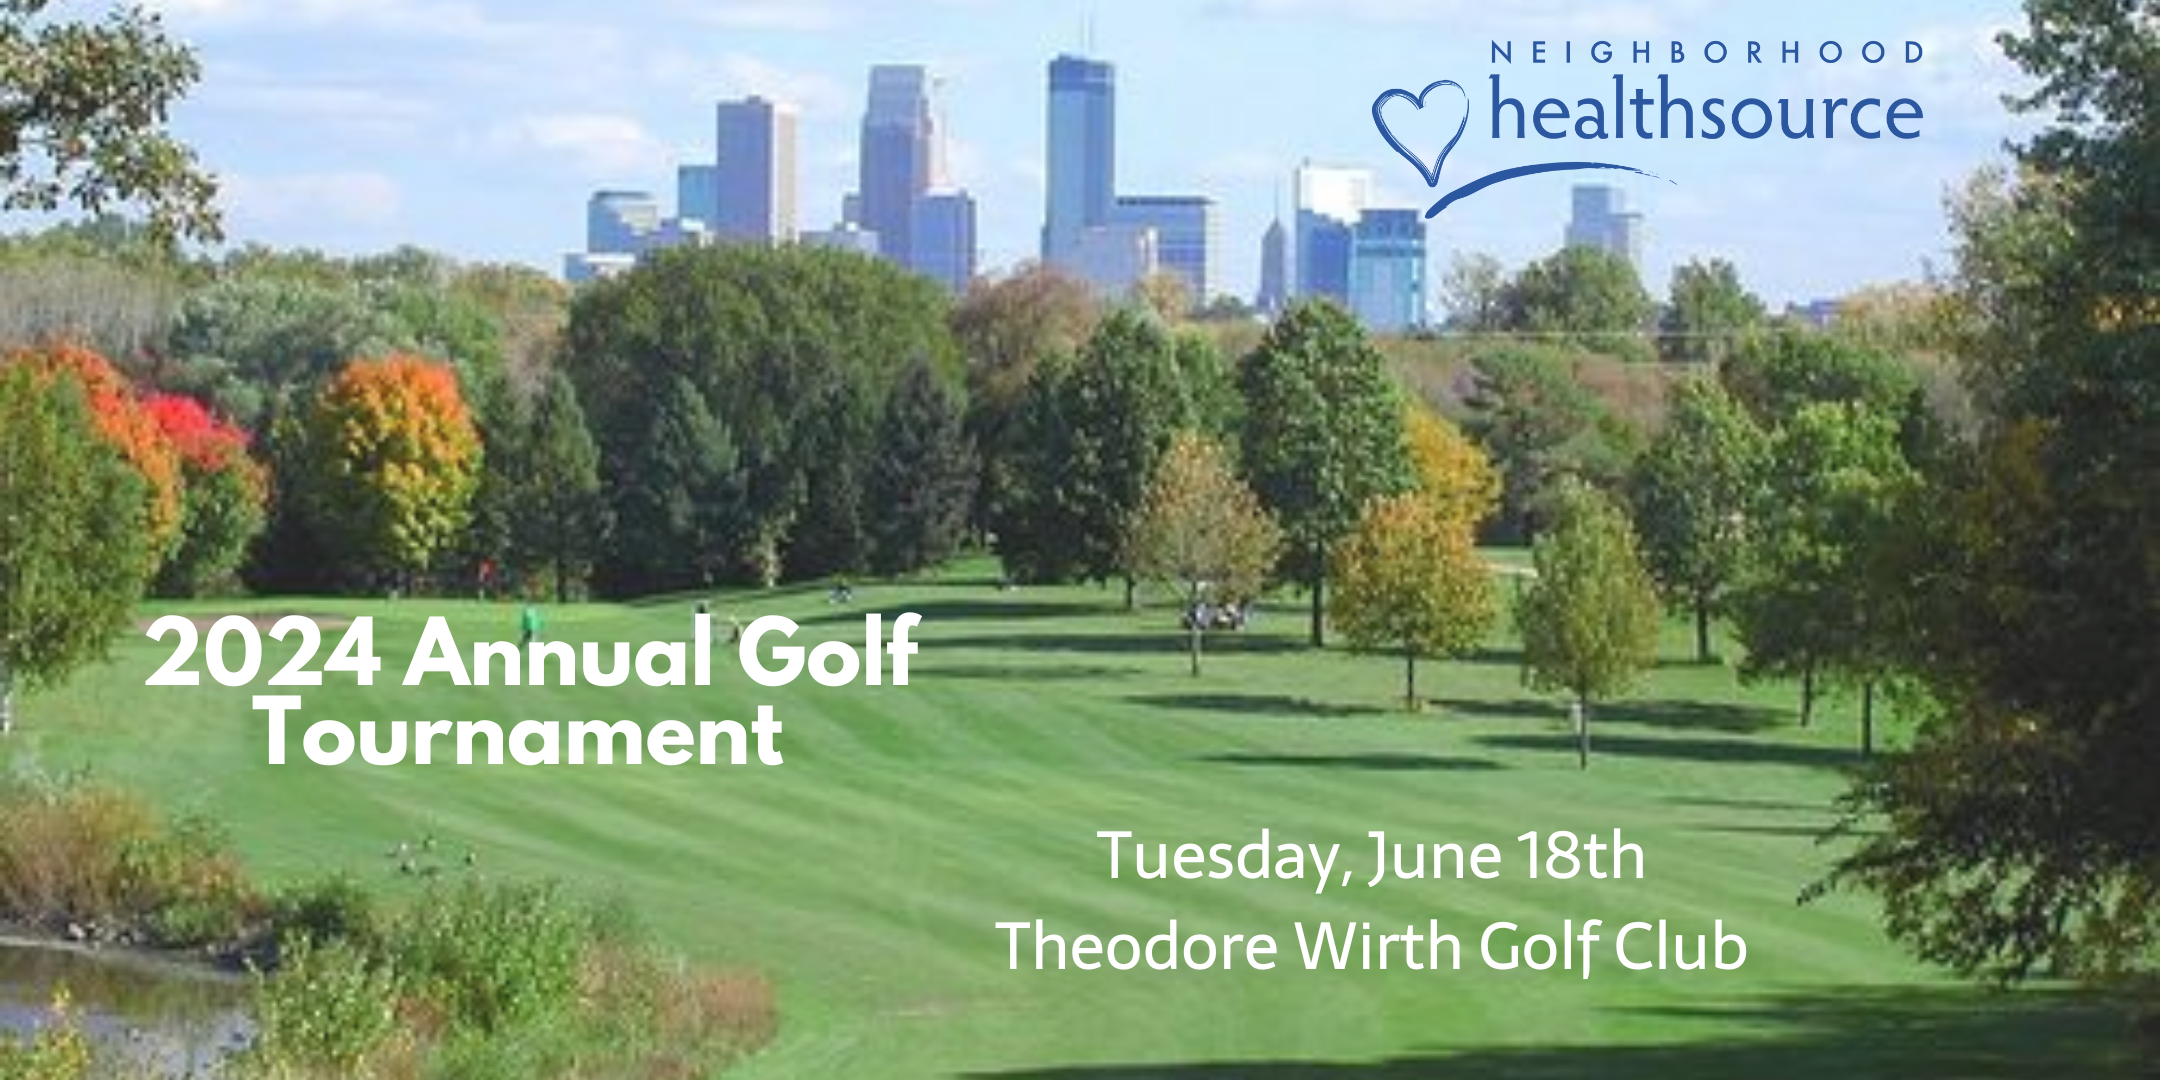 Neighborhood HealthSource 2024 Annual Golf Tournament